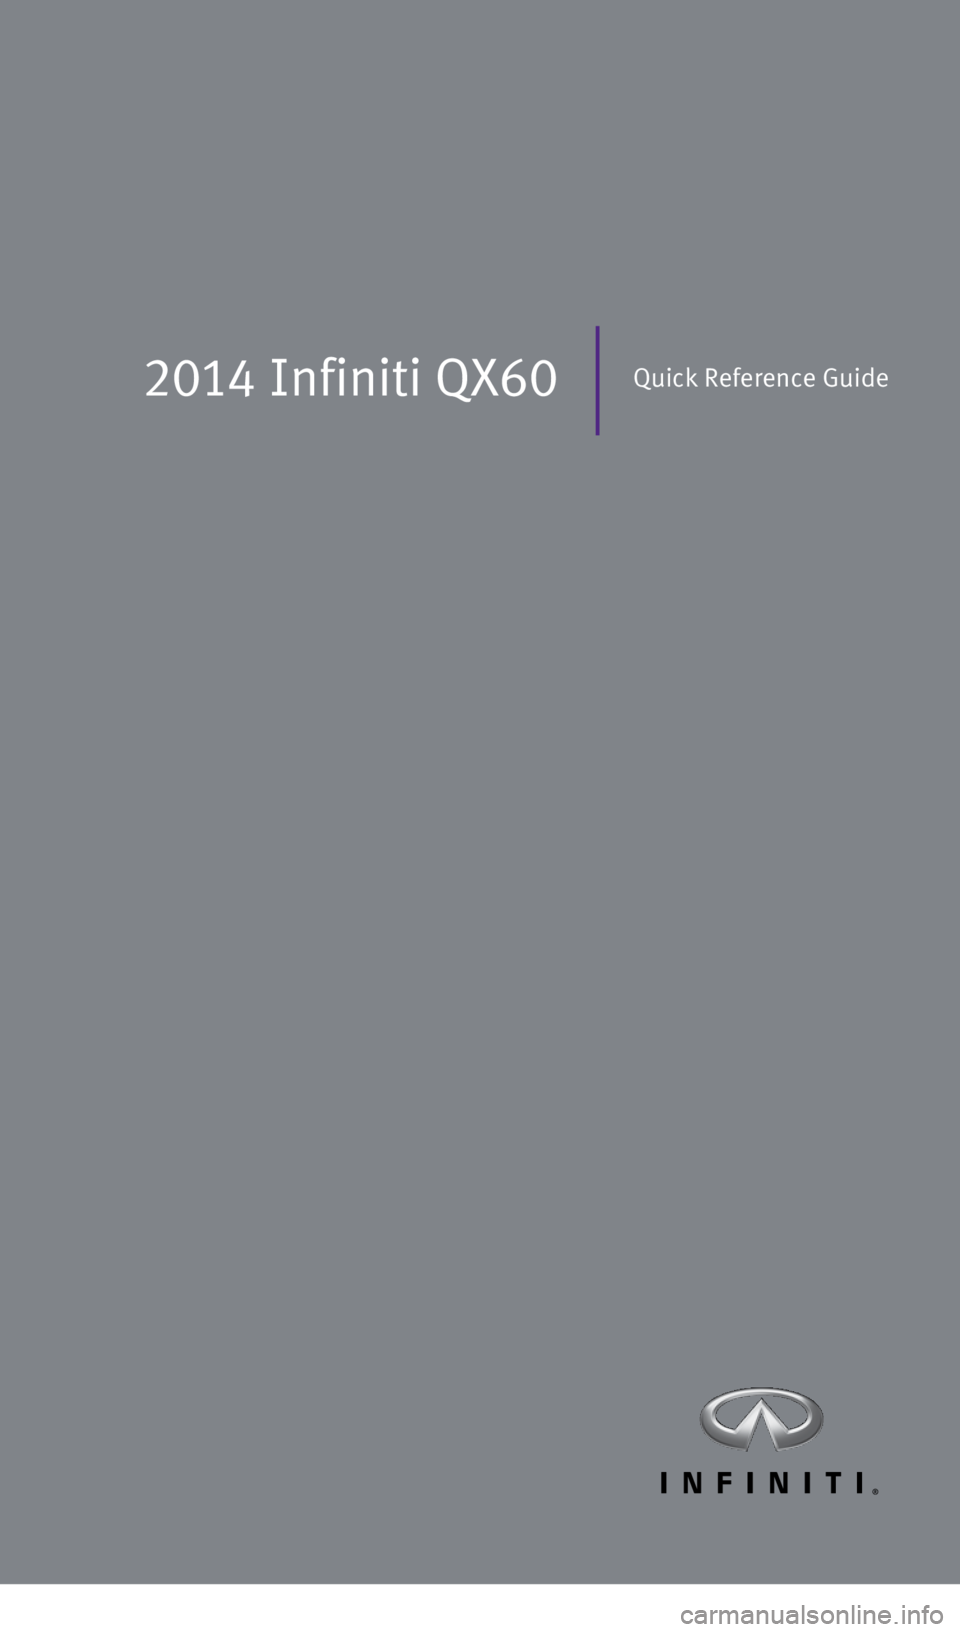 INFINITI QX60 2014  Quick Reference Guide 2014 Infiniti QX60Quick Reference Guide
1591599_14b_Infiniti_QX60_QRG_100913.indd   310/9/13   11:08 AM 